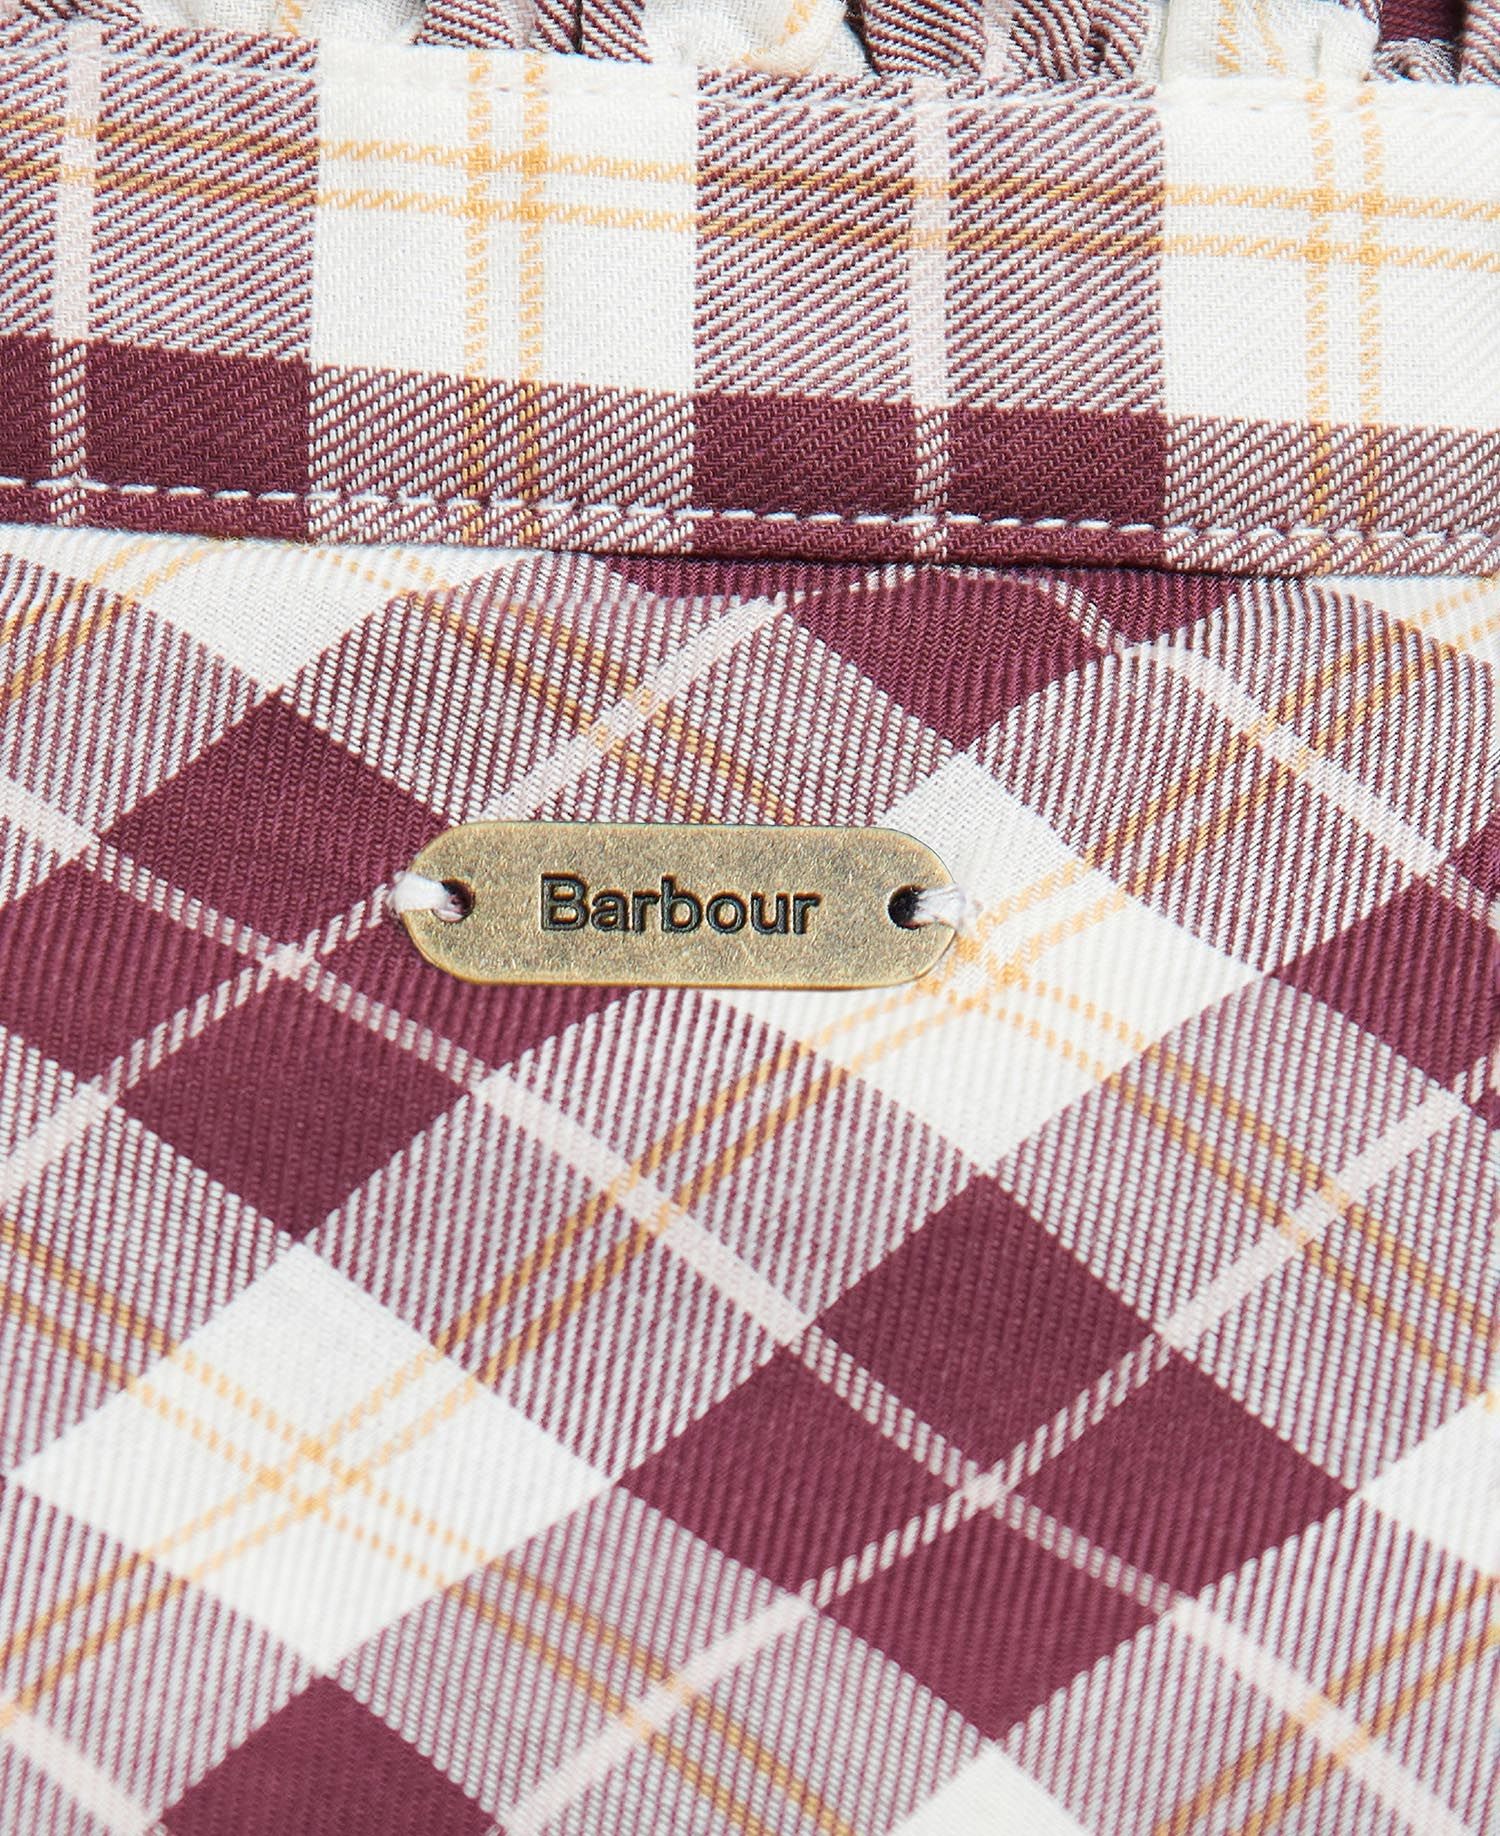 Barbour Daffodil Shirt - Windsor Check